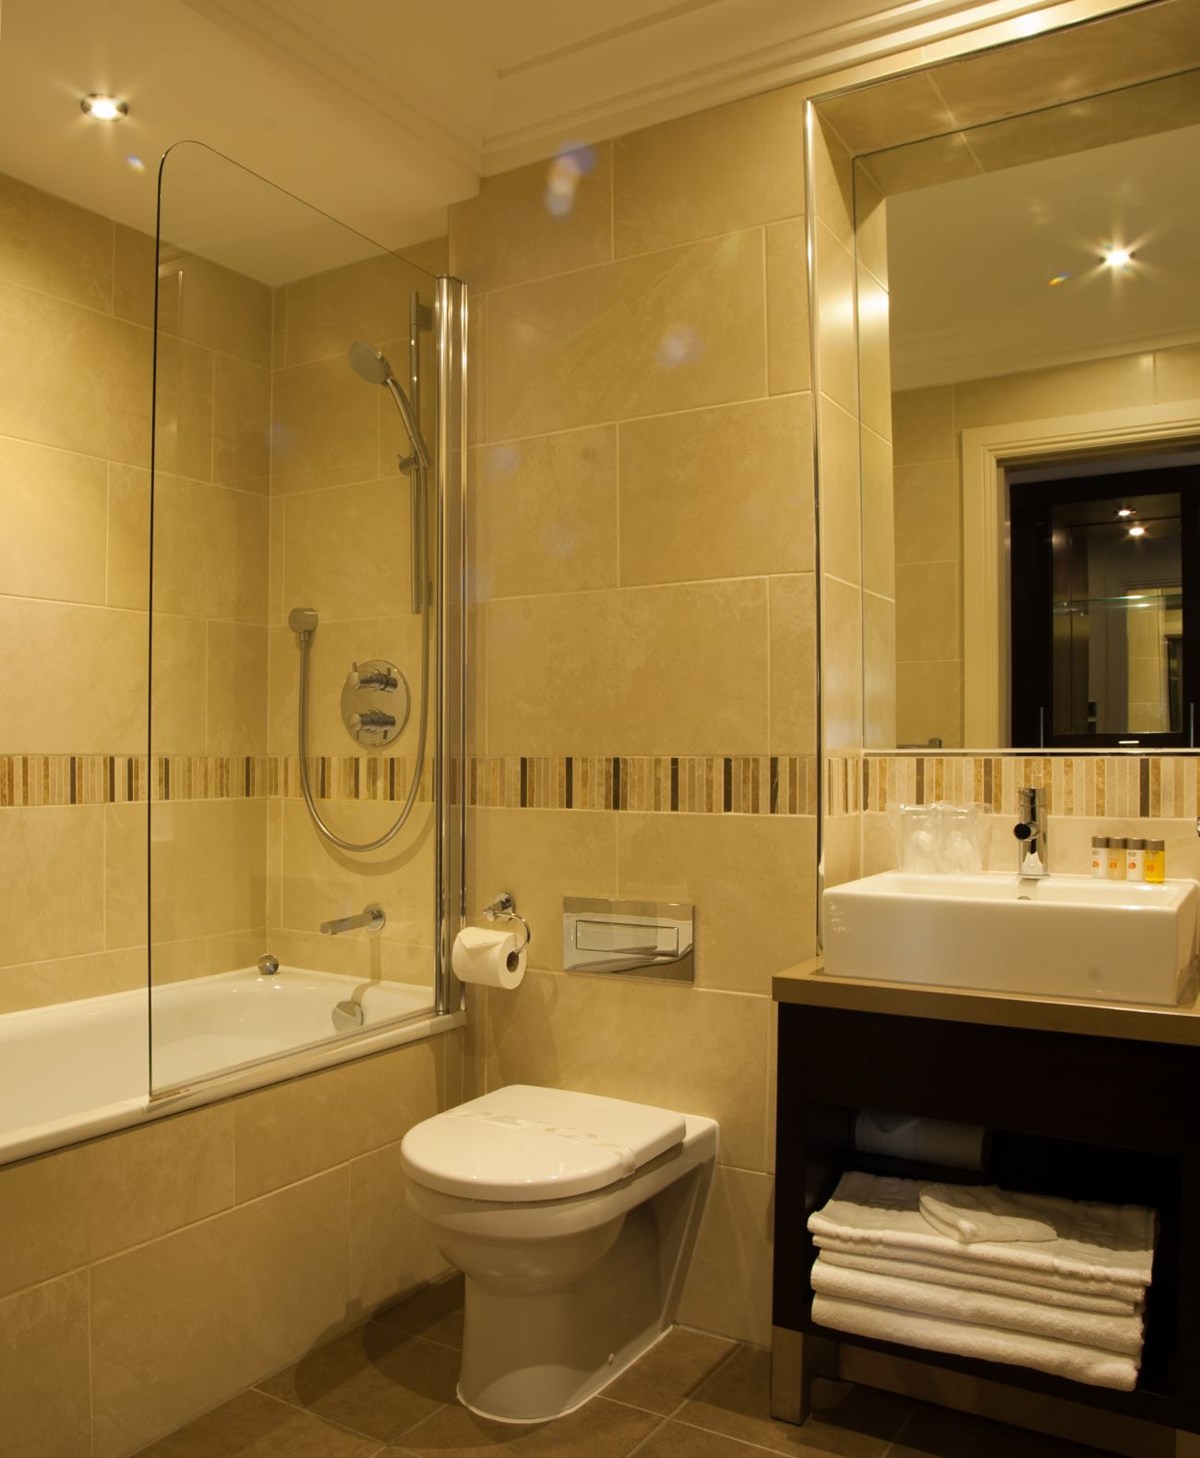 A hotel room bathroom at the DA in Ayrshire 